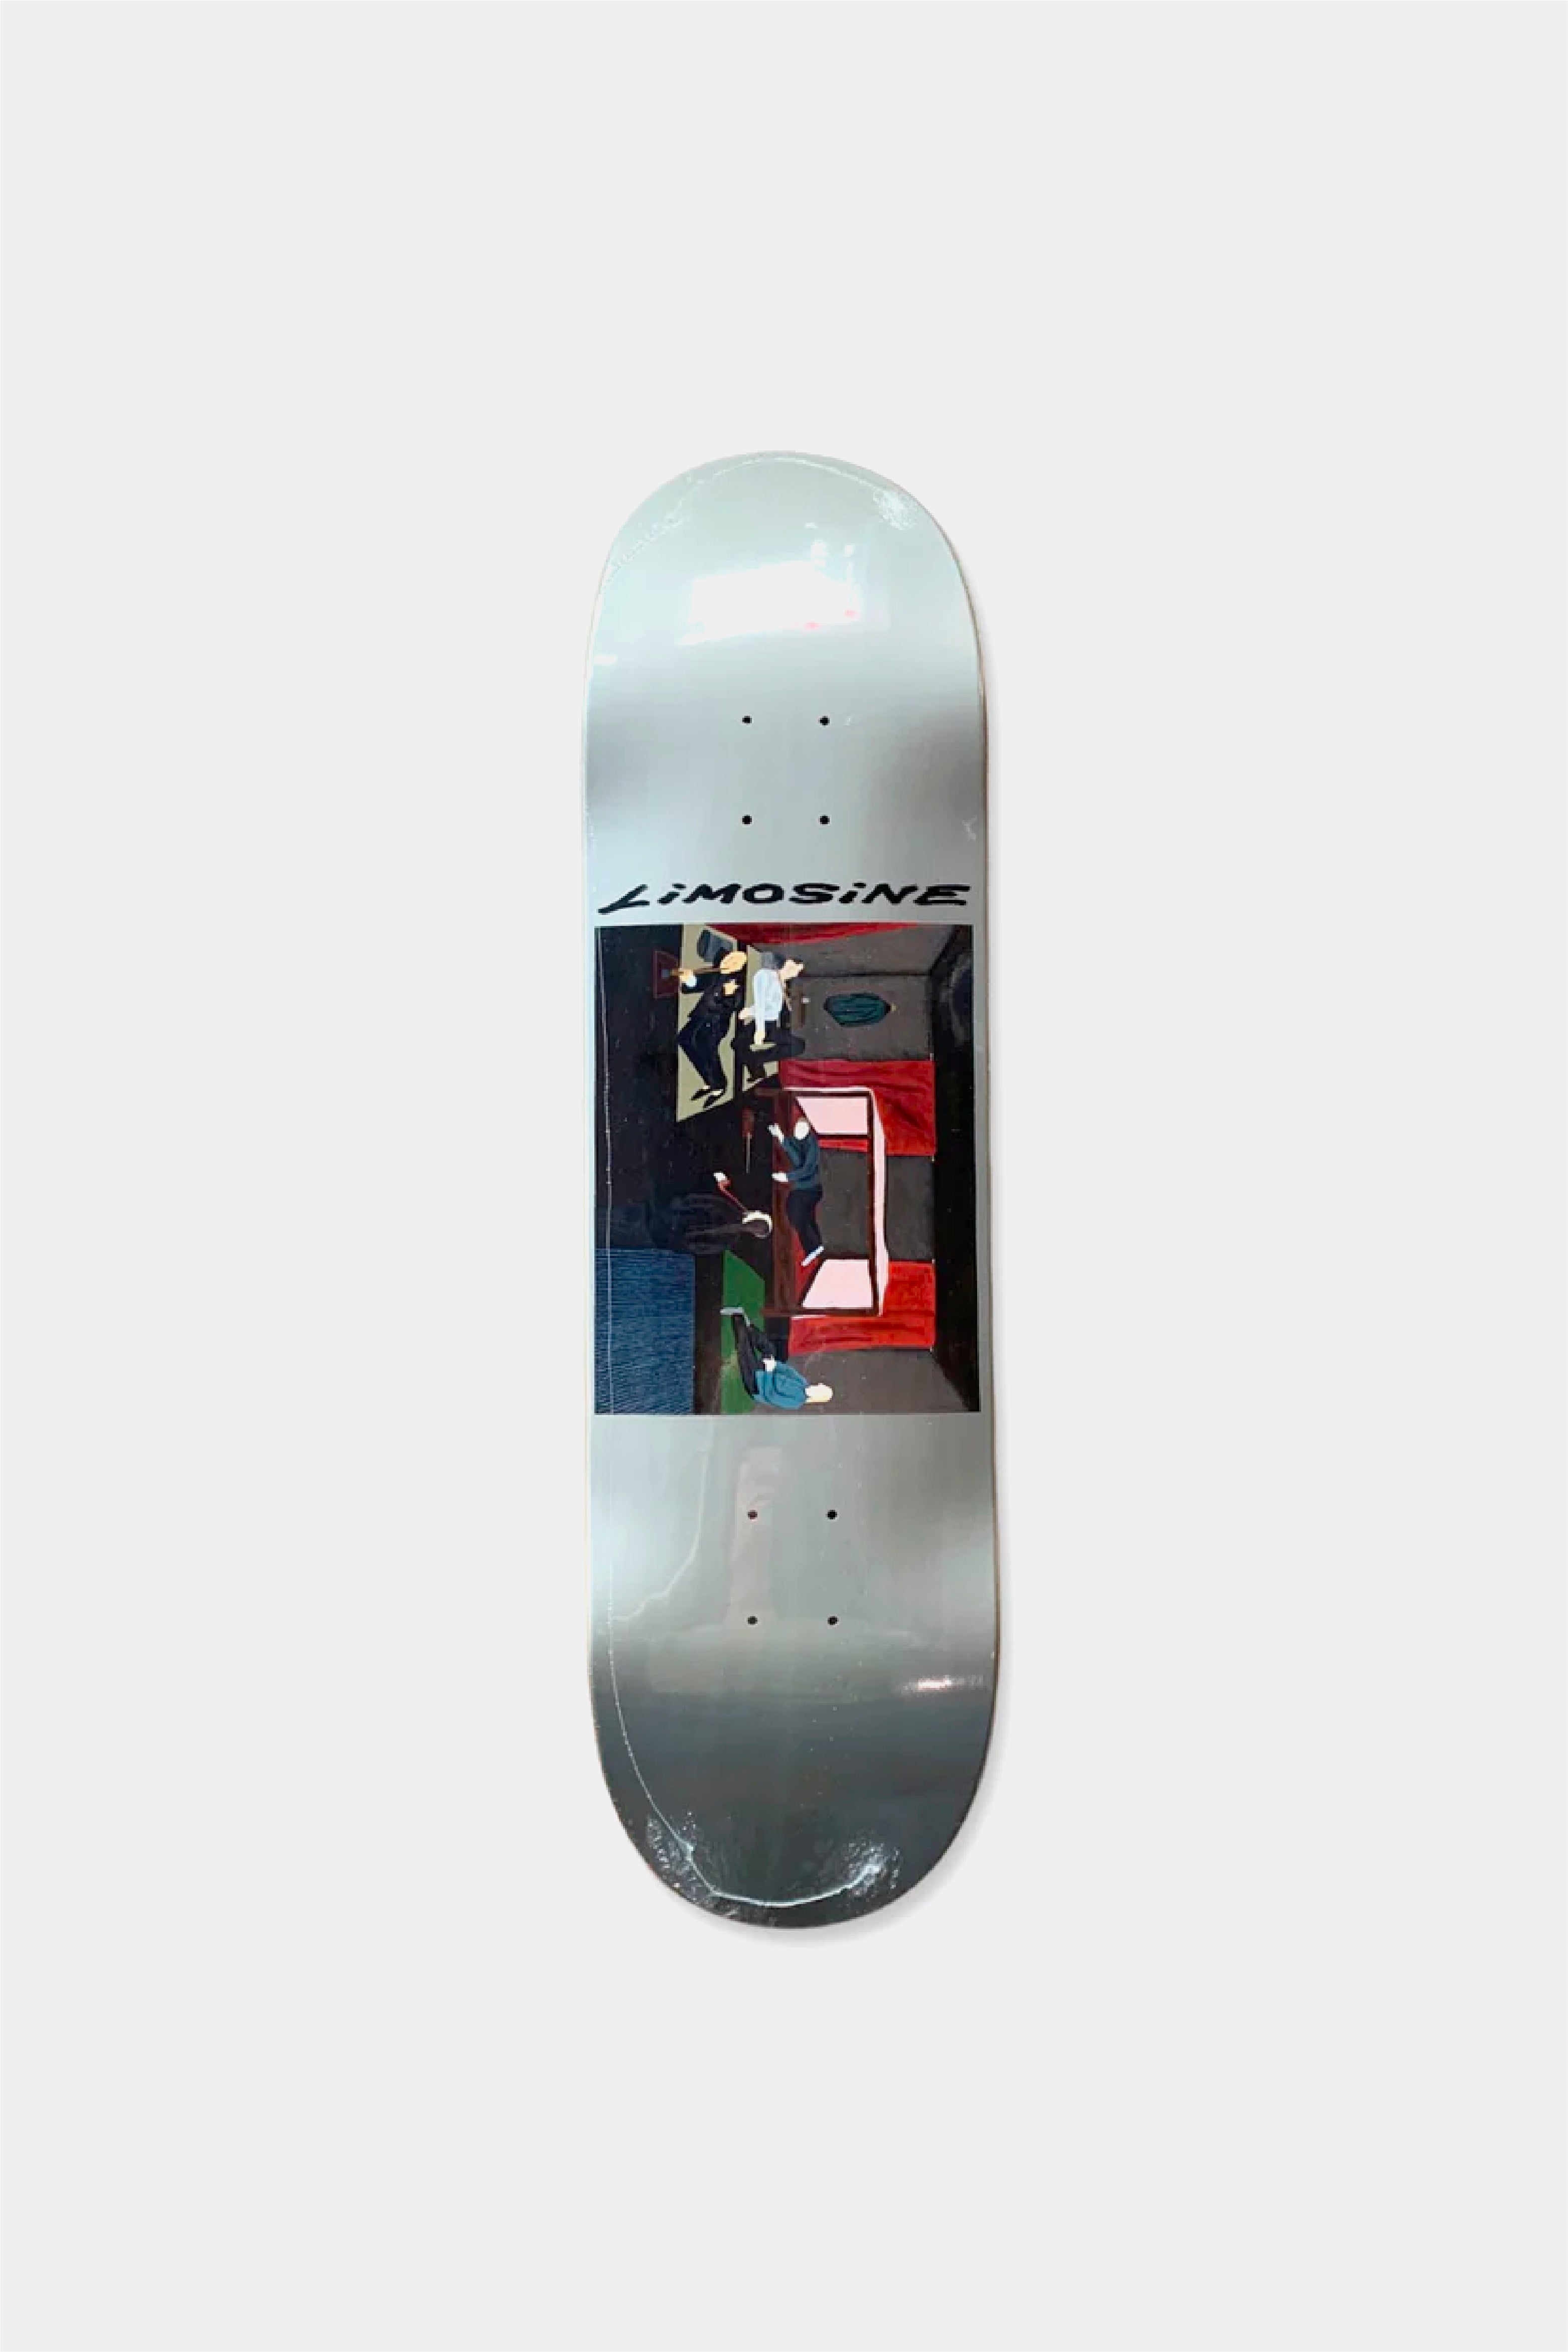 Selectshop FRAME - LIMOSINE Opium Den Deck - Max Pulmer Skate Concept Store Dubai